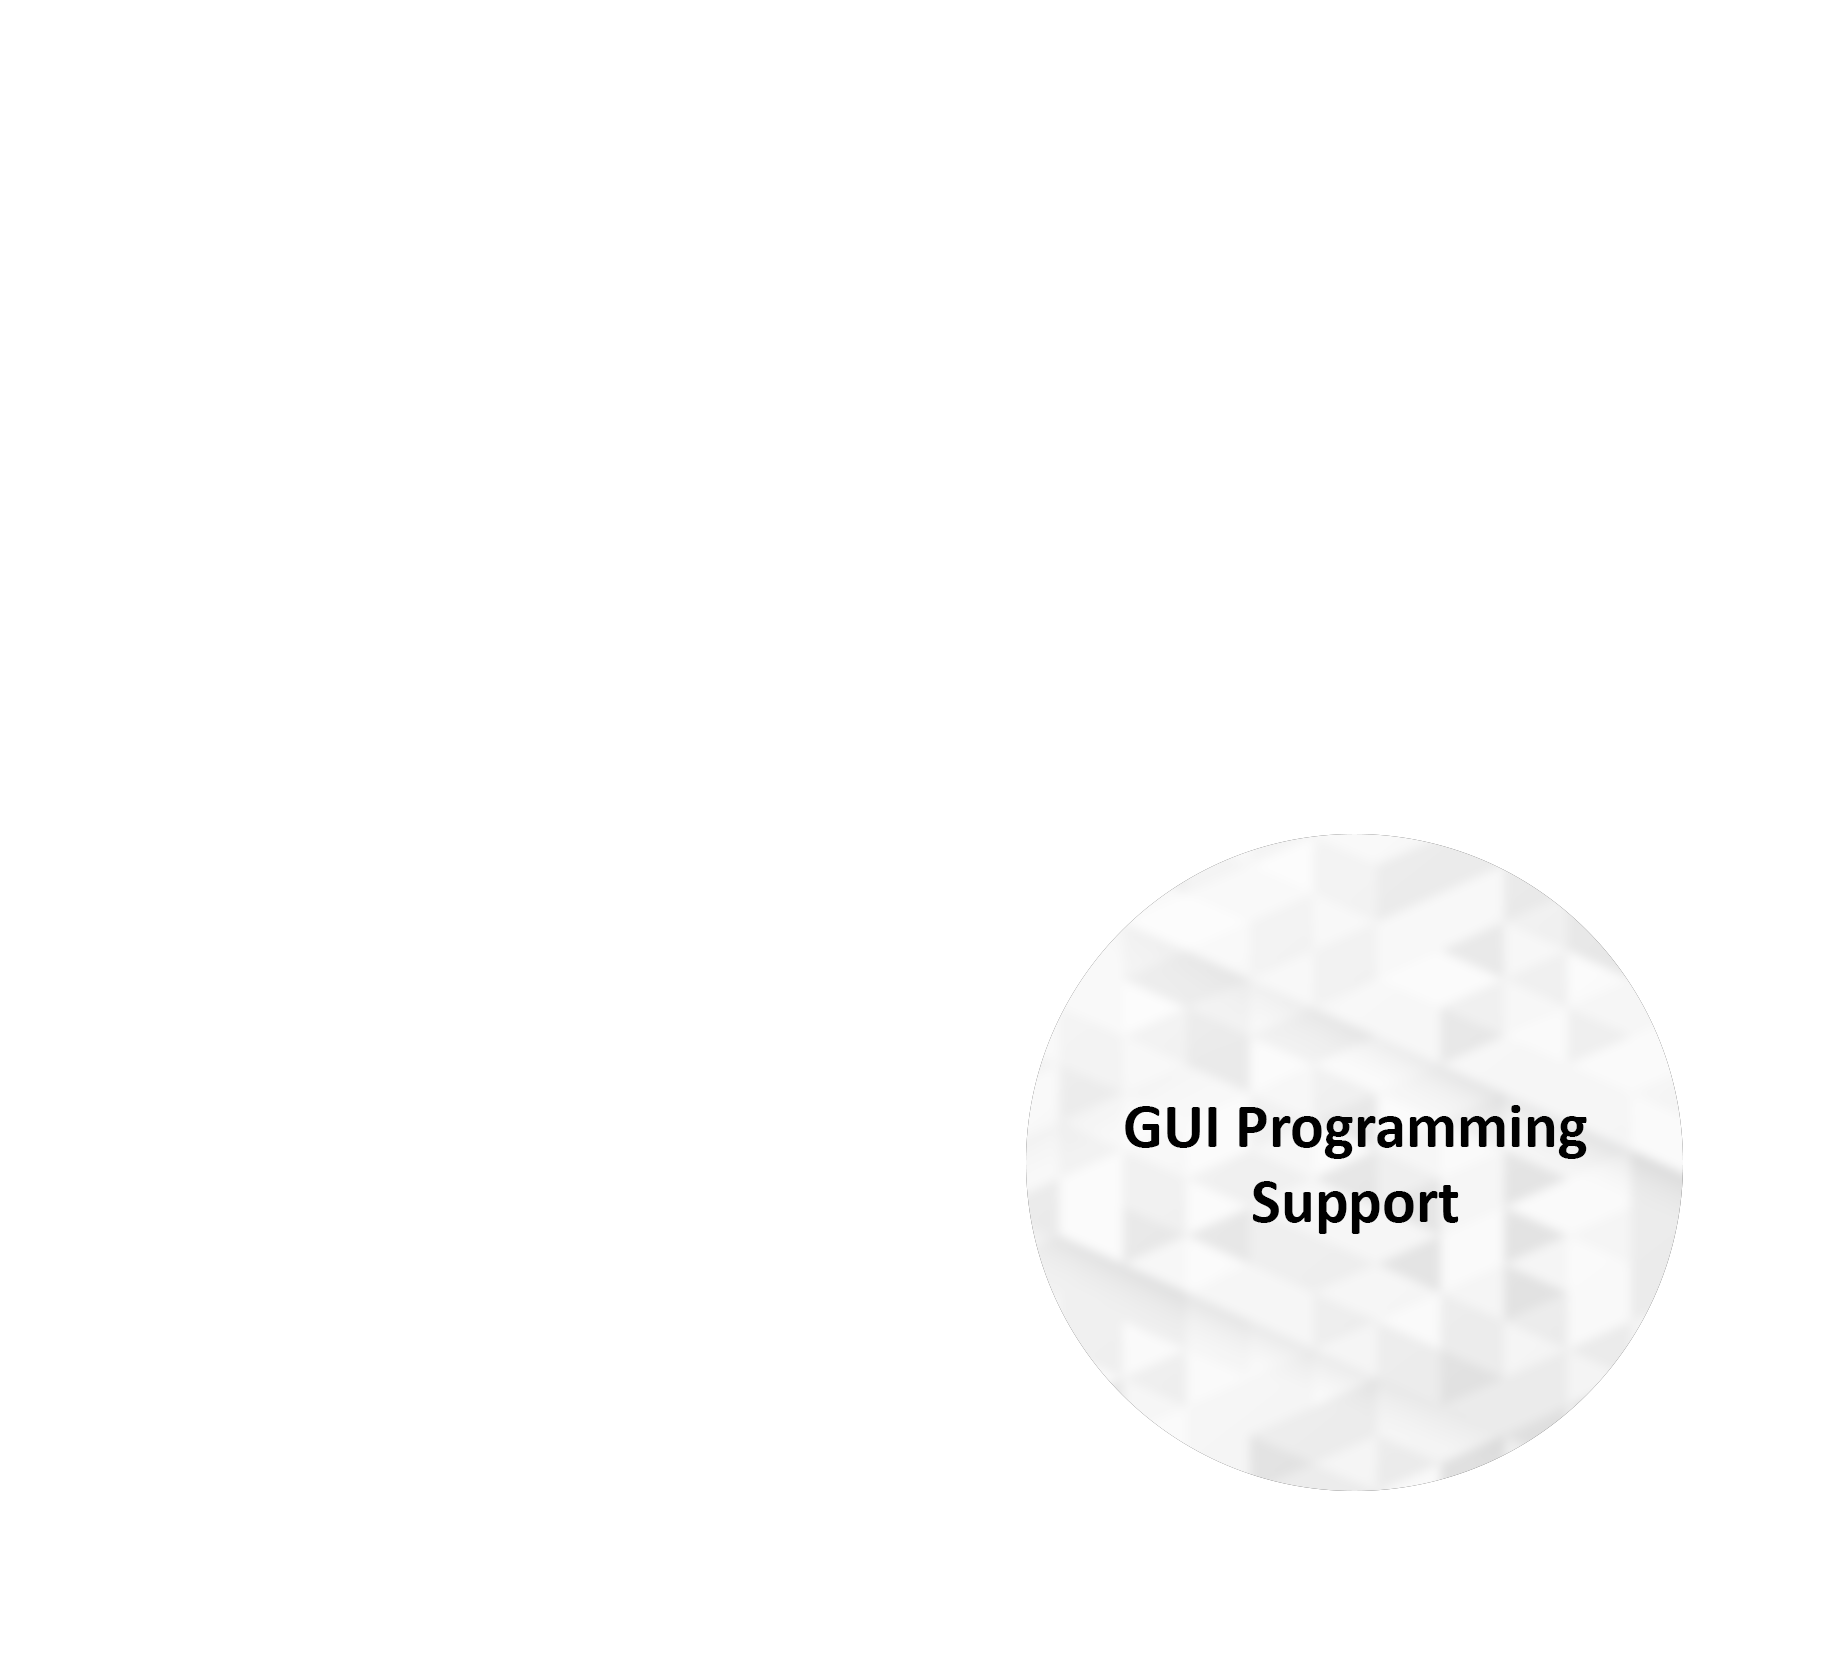 Gui Programming